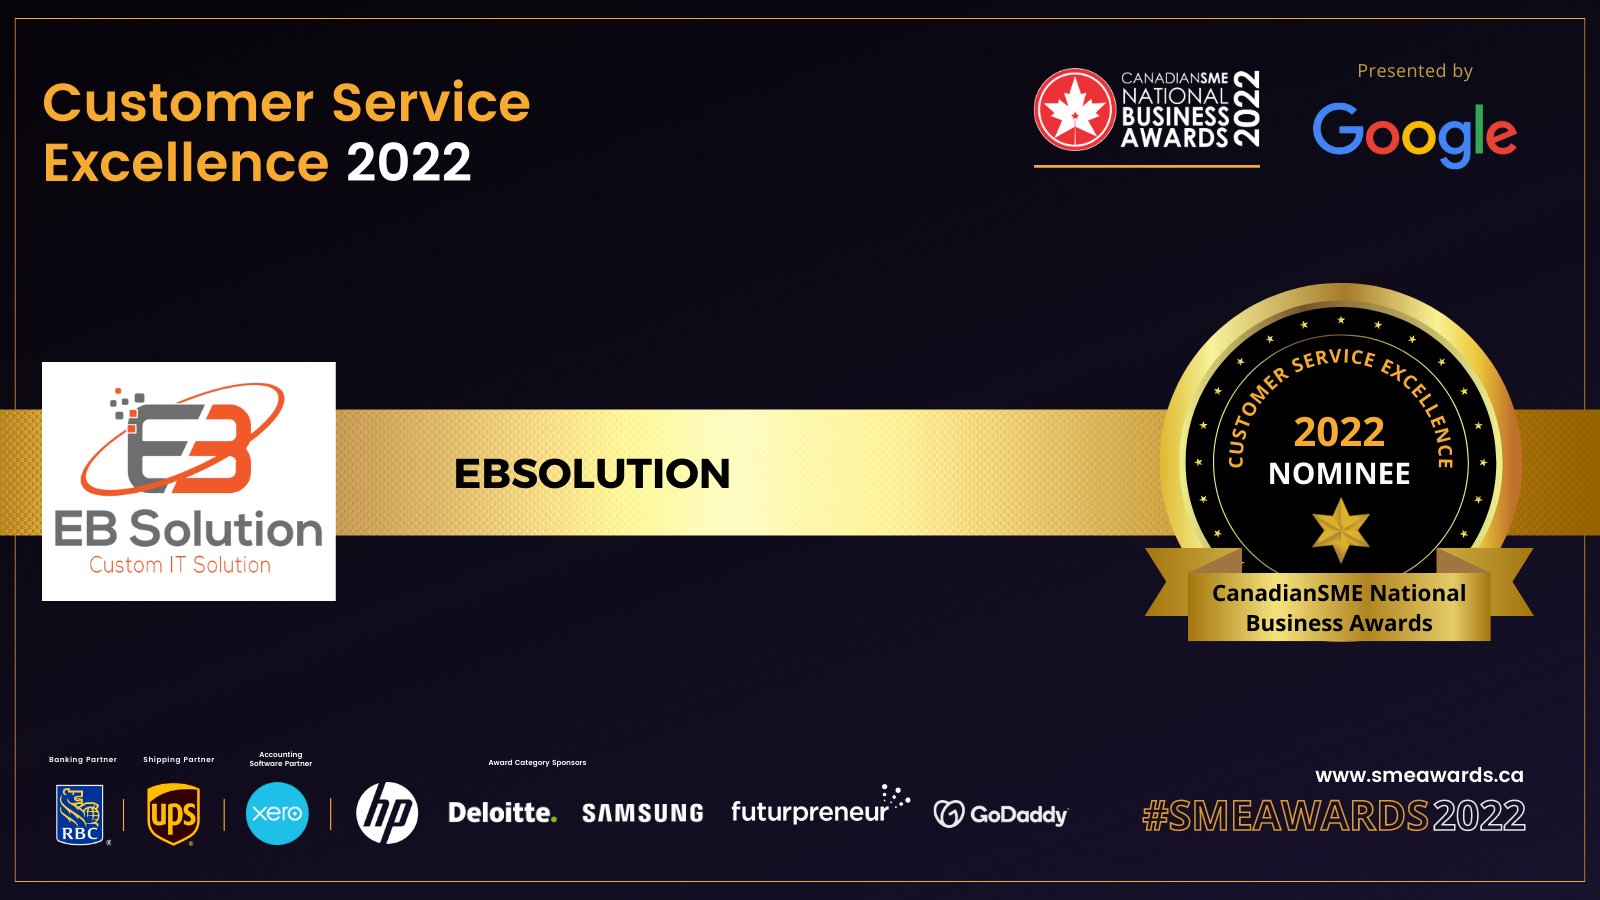 Customer Service Excellence 2022 Award